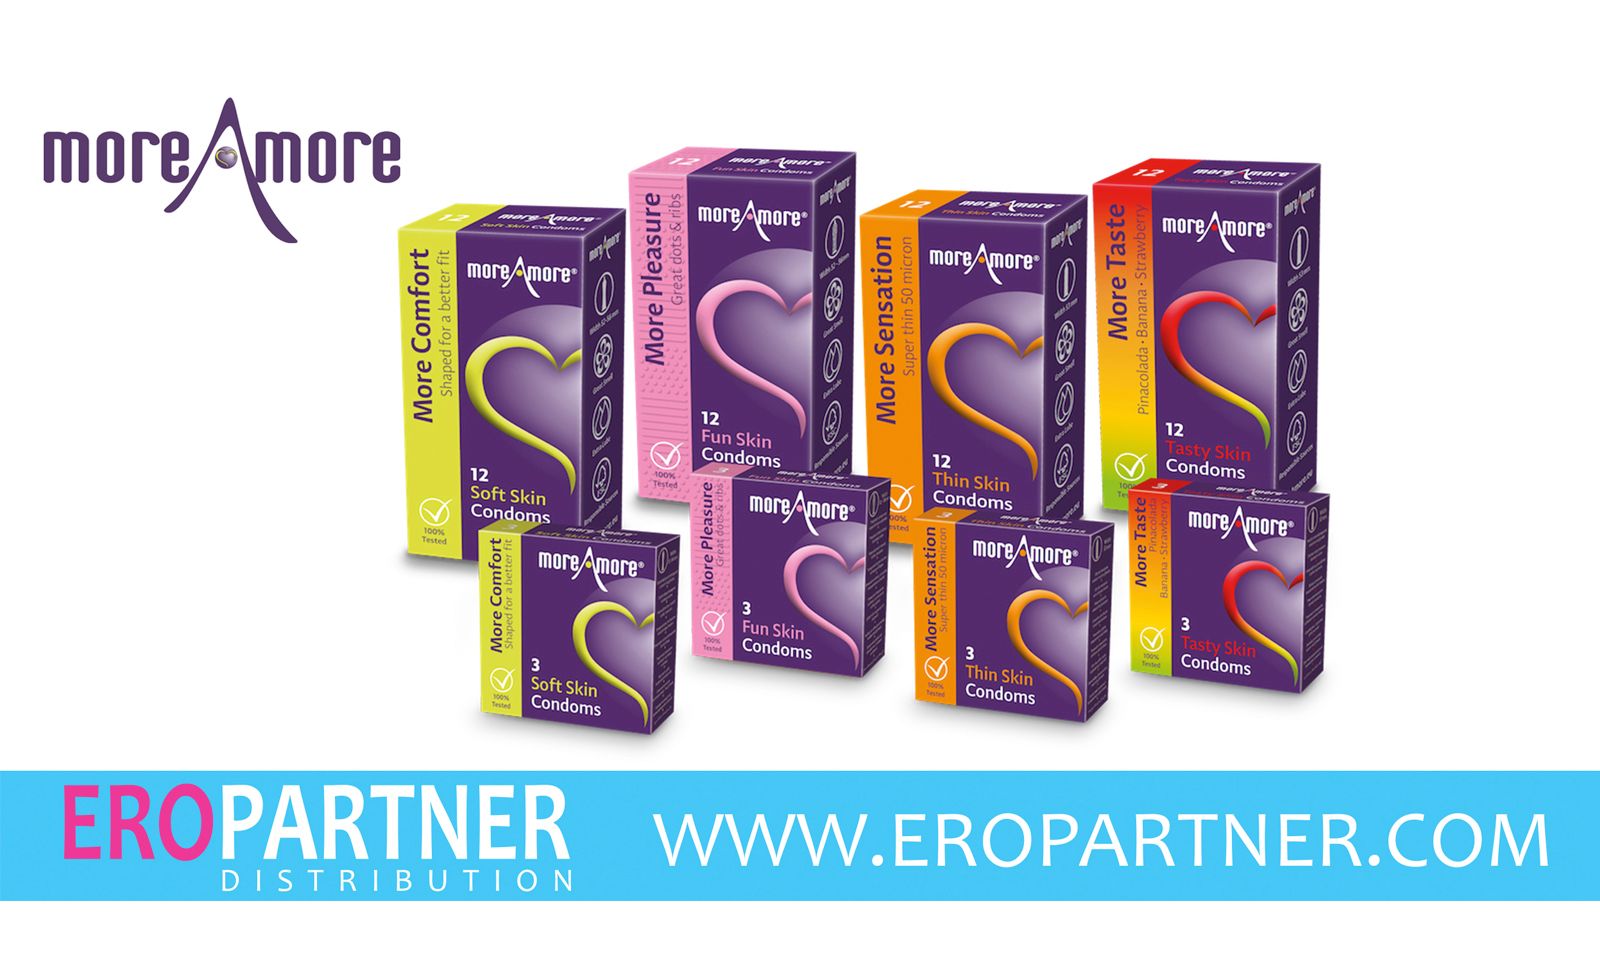 Eropartner Now Has MoreAmore Condoms, Lube